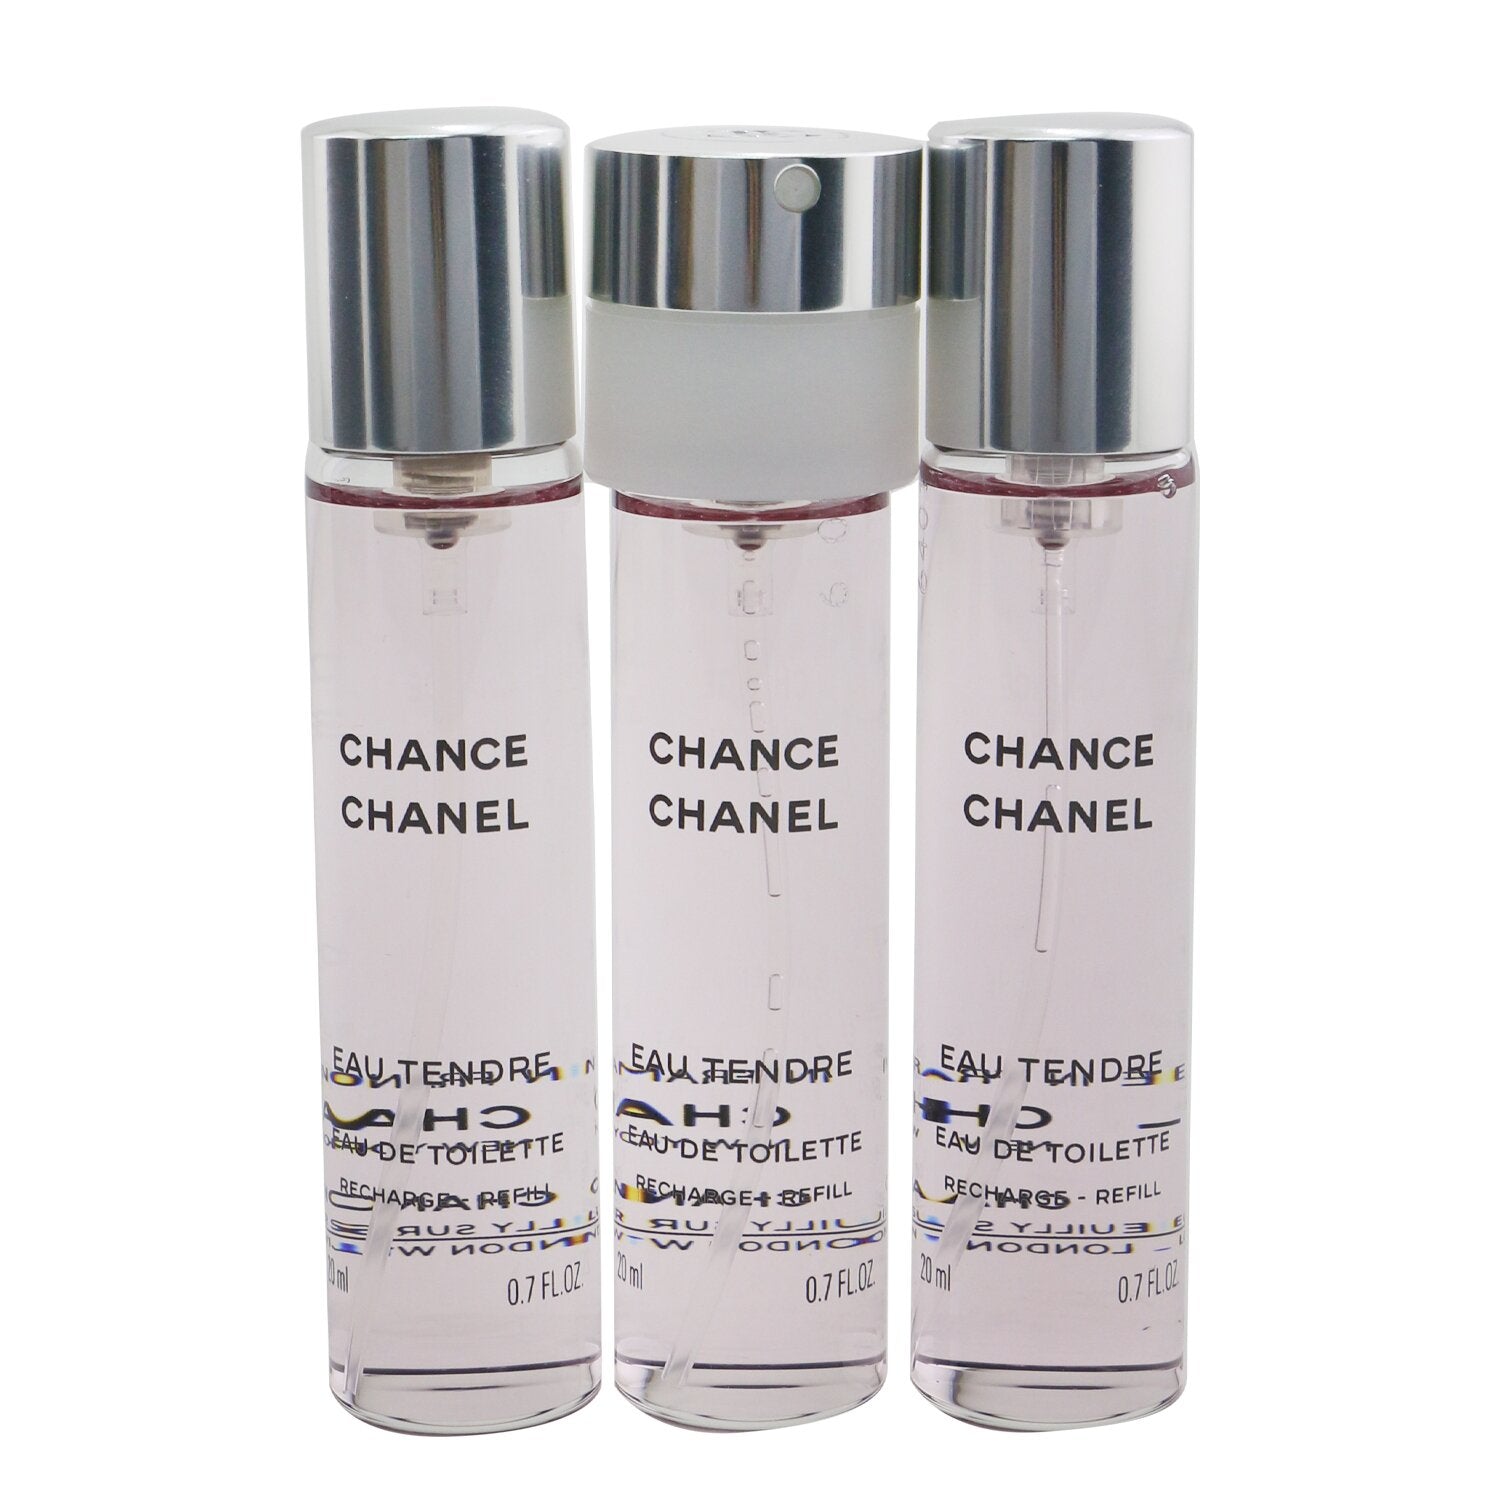 Chanel chance twist and spray refill 20mlsx2